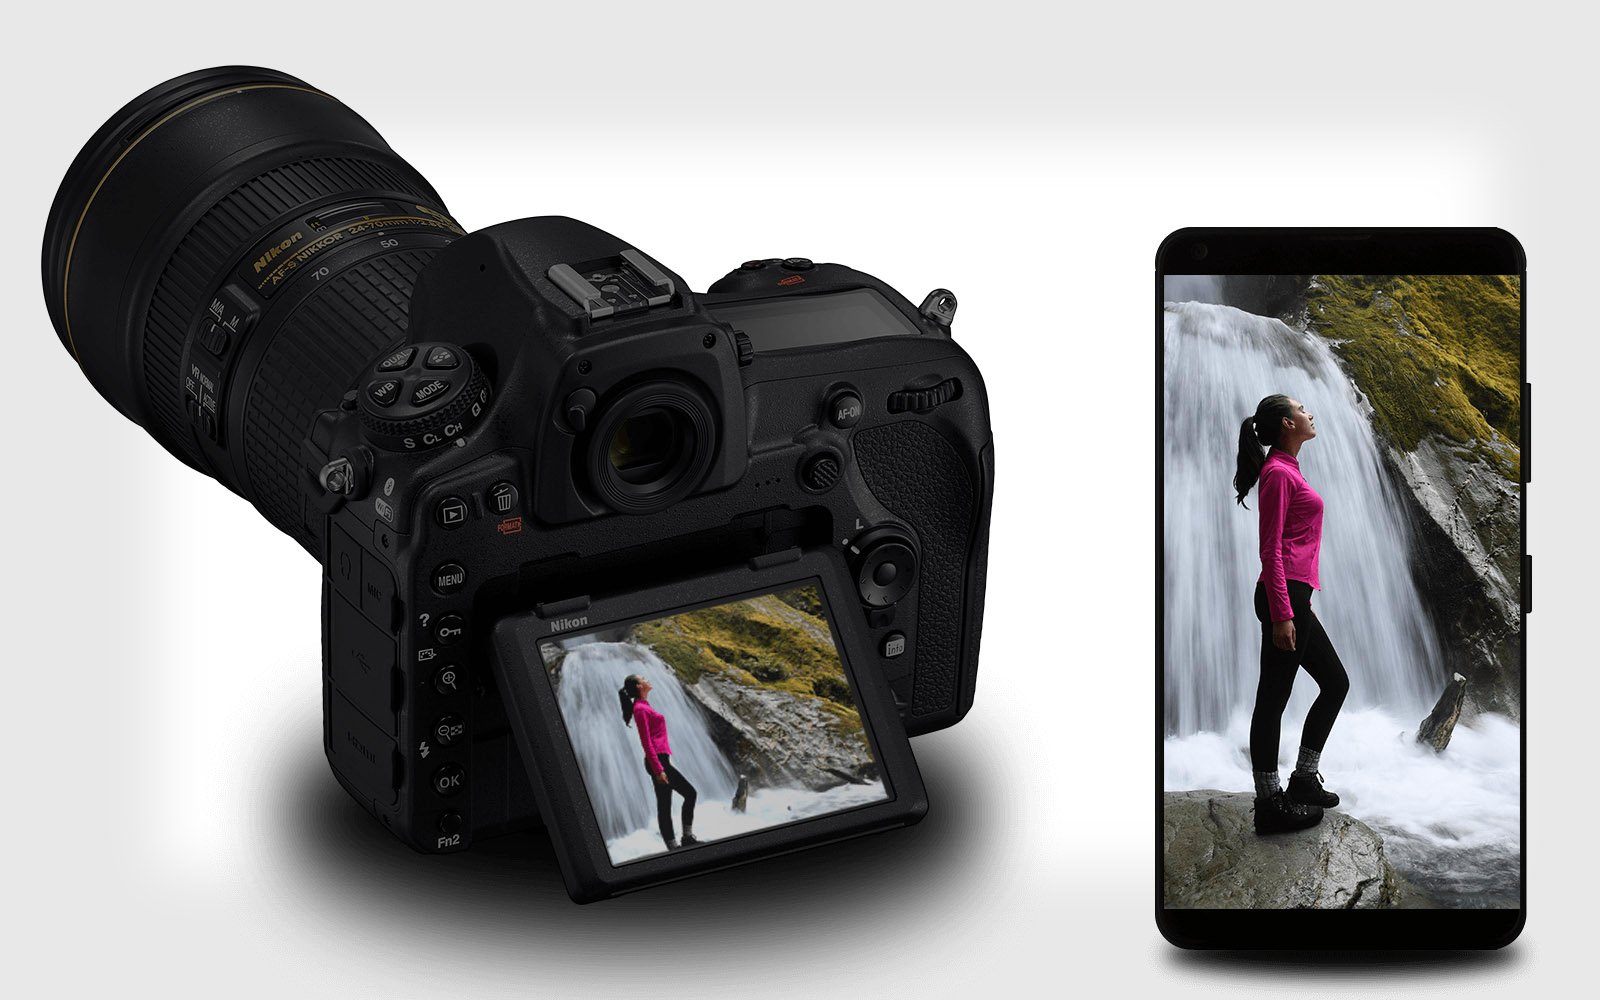 Nikon Has Finally Added RAW Image Transfer to the SnapBridge App